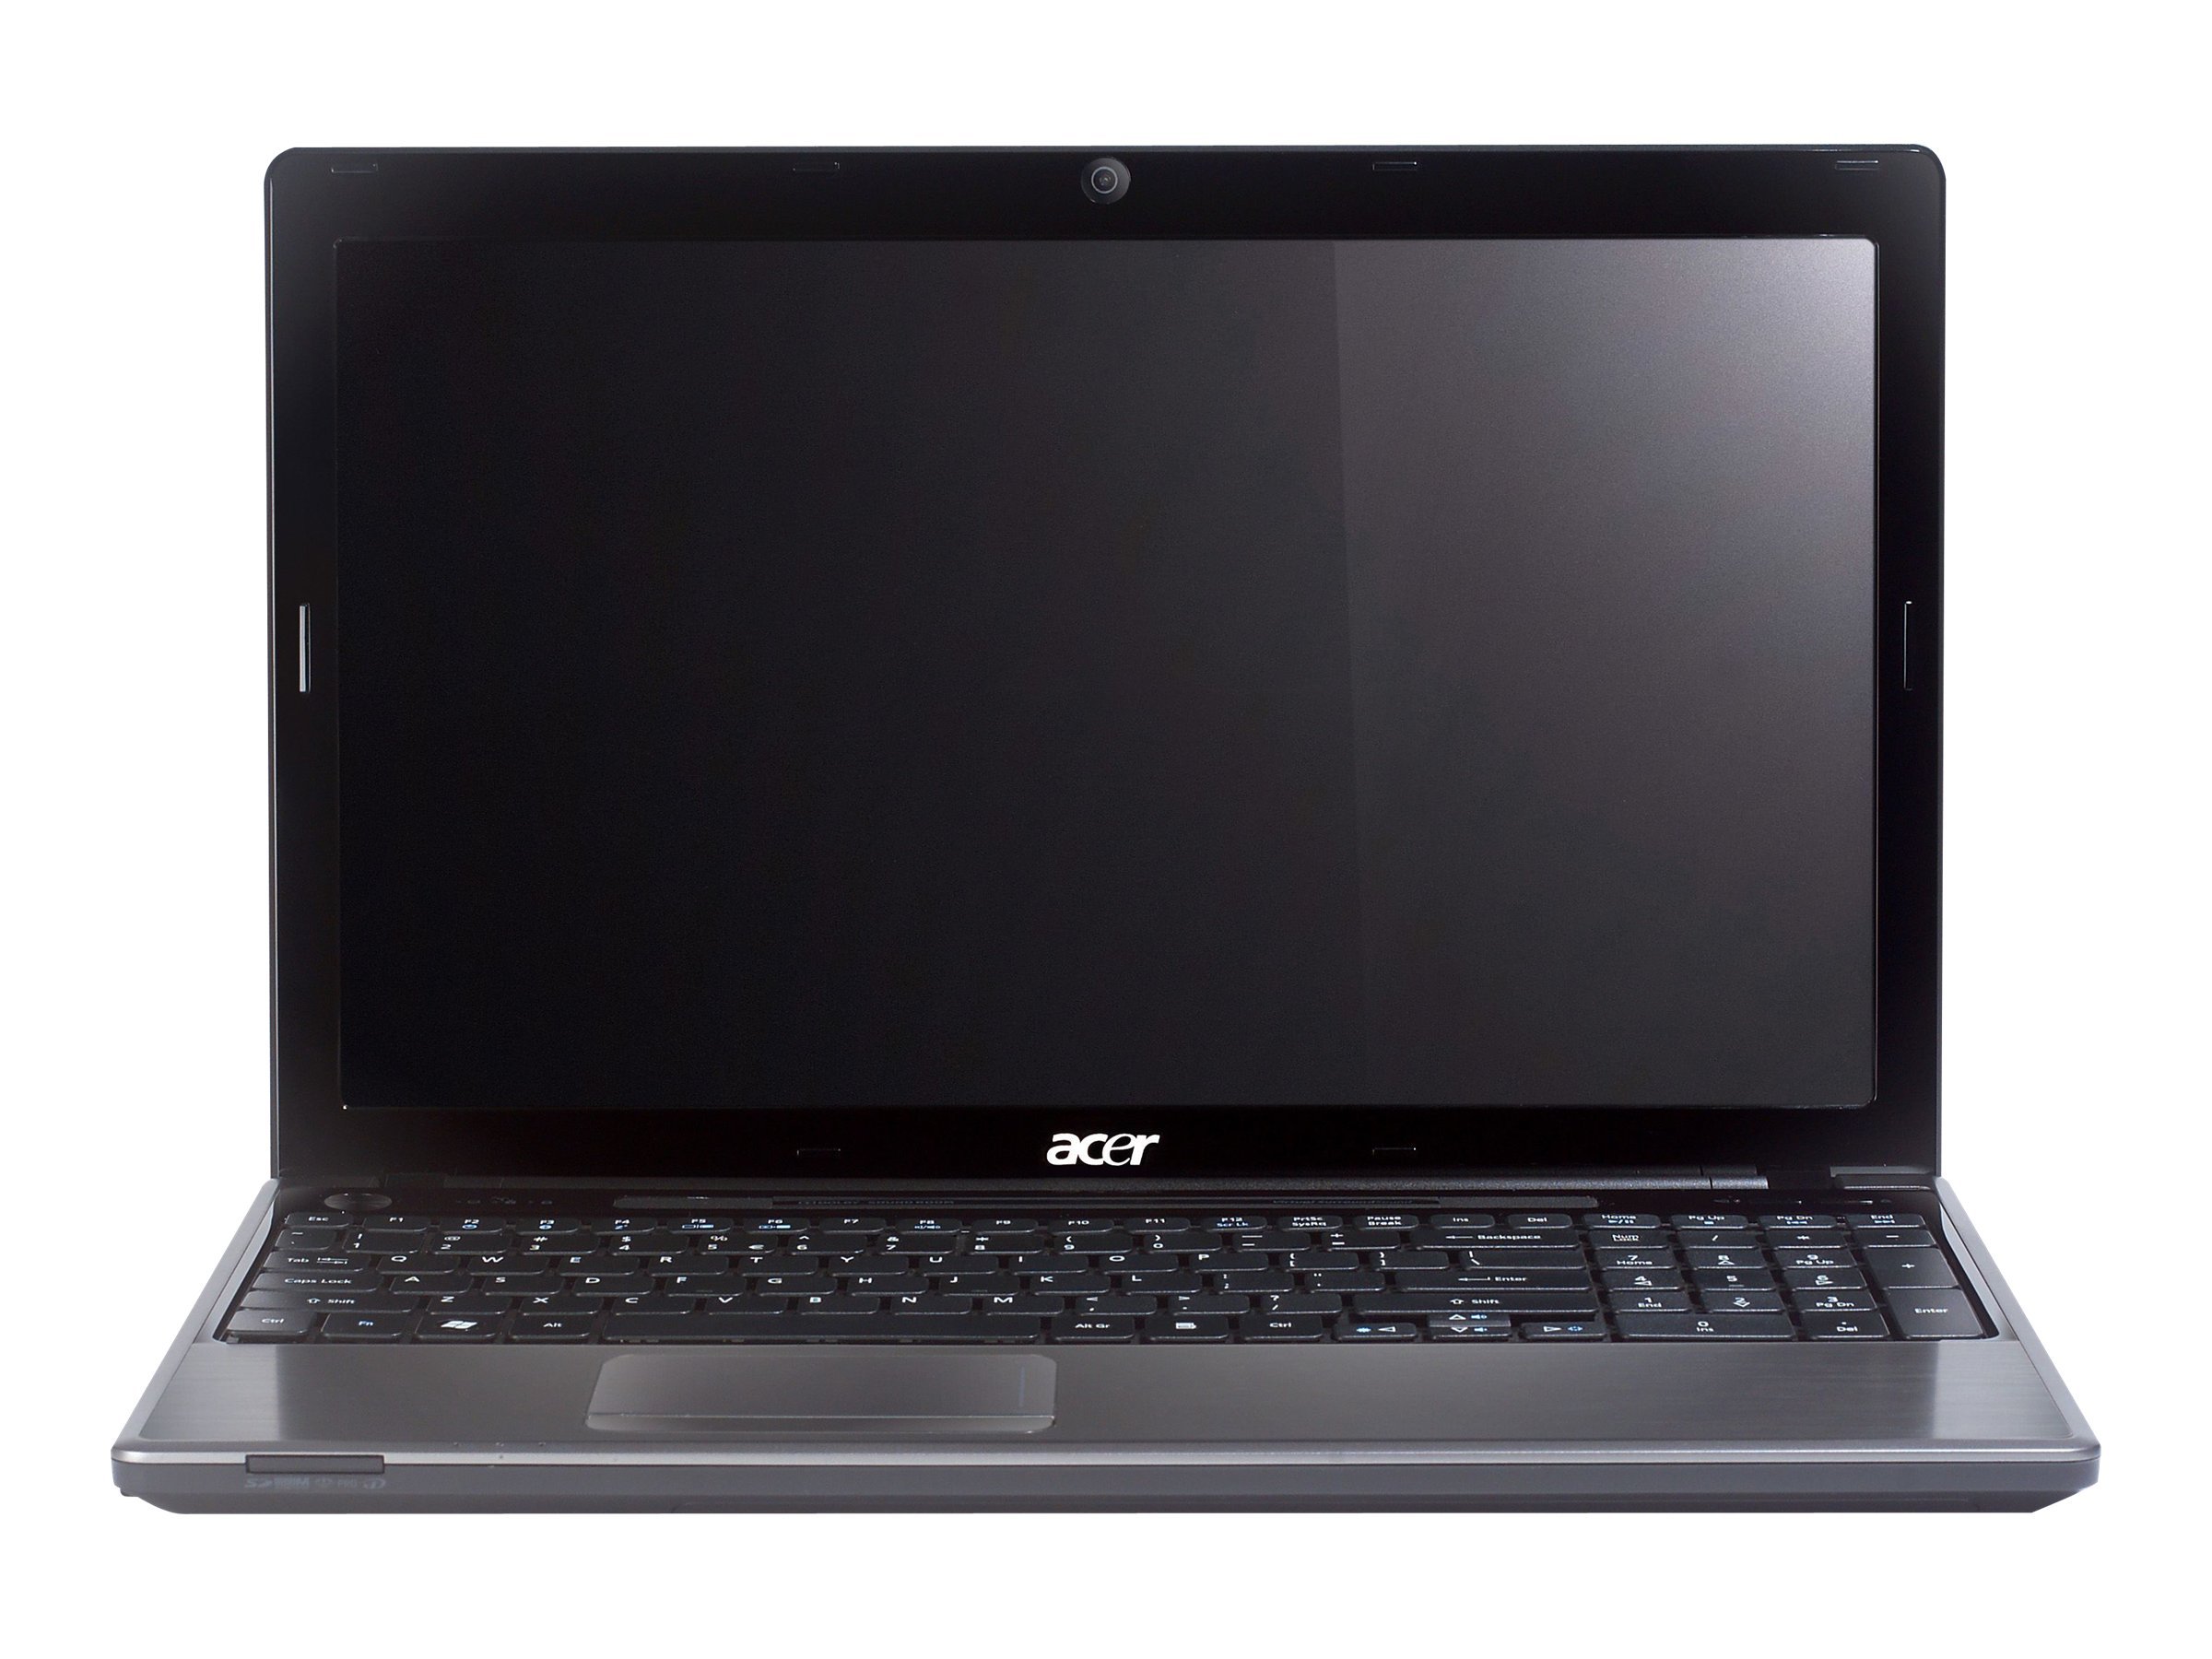 Acer Aspire 5745DG